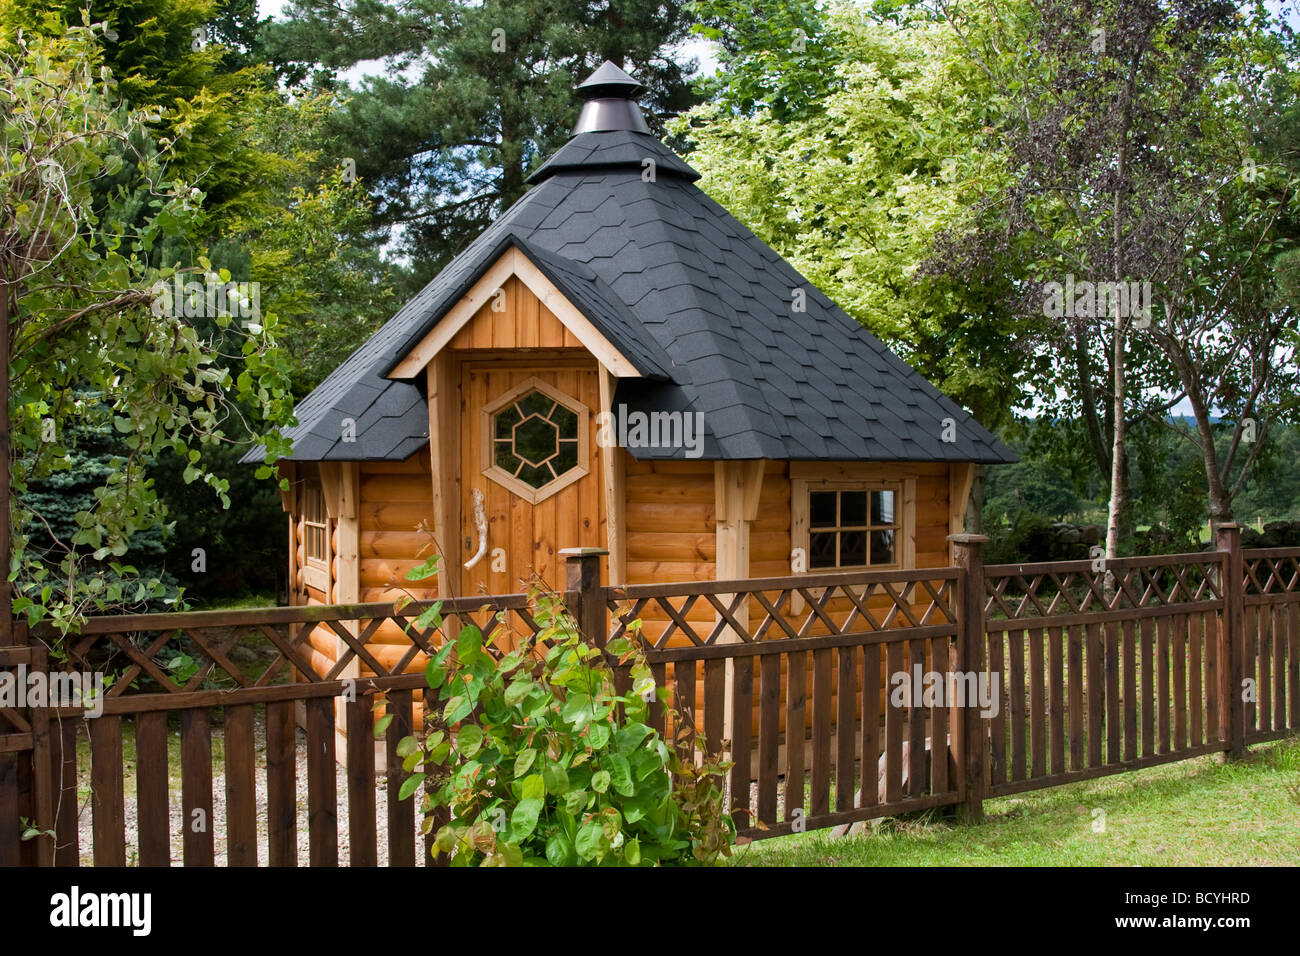 Hexagonal wooden felted Garden shed at Deeside Log Cabins 